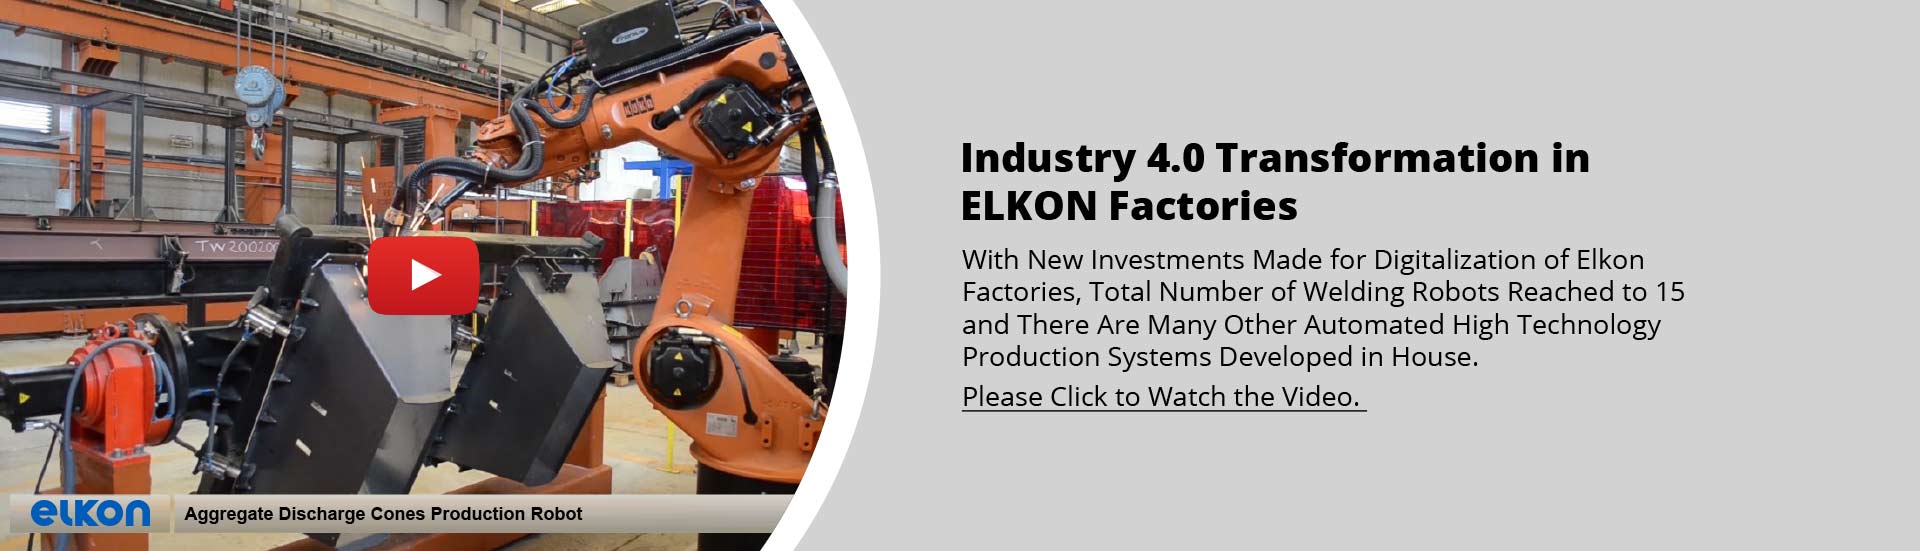 Industry 4.0 Transformation in ELKON Factories 